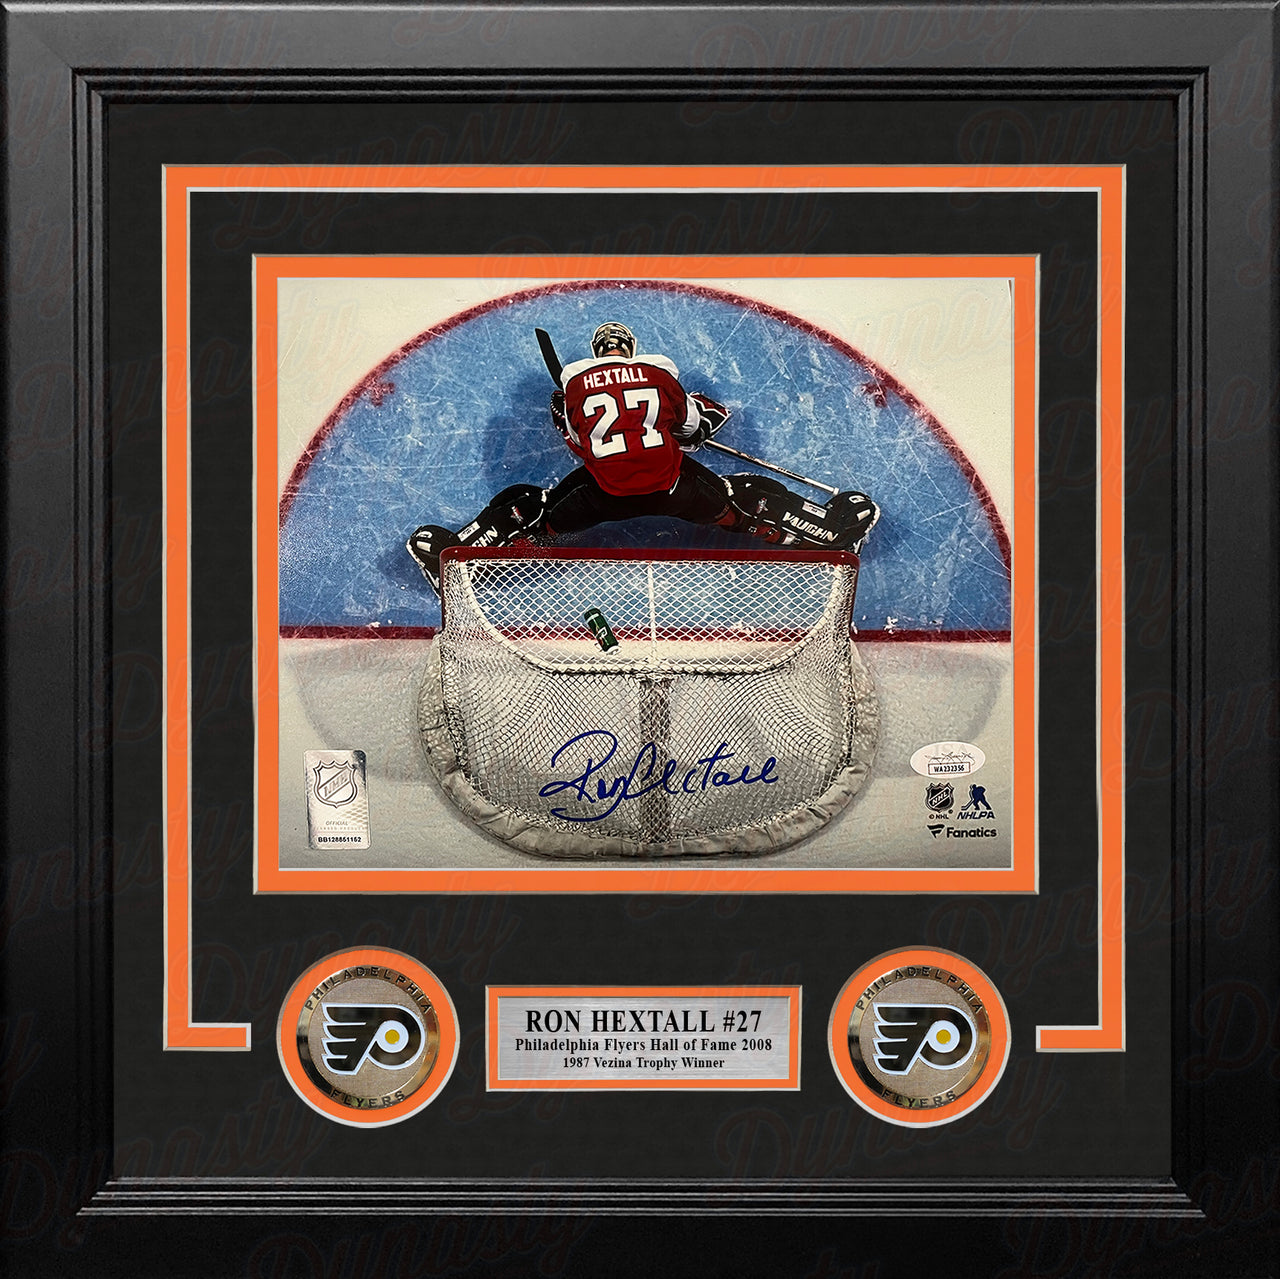 Ron Hextall Above the Crease Philadelphia Flyers Autographed Framed Hockey Photo - Dynasty Sports & Framing 